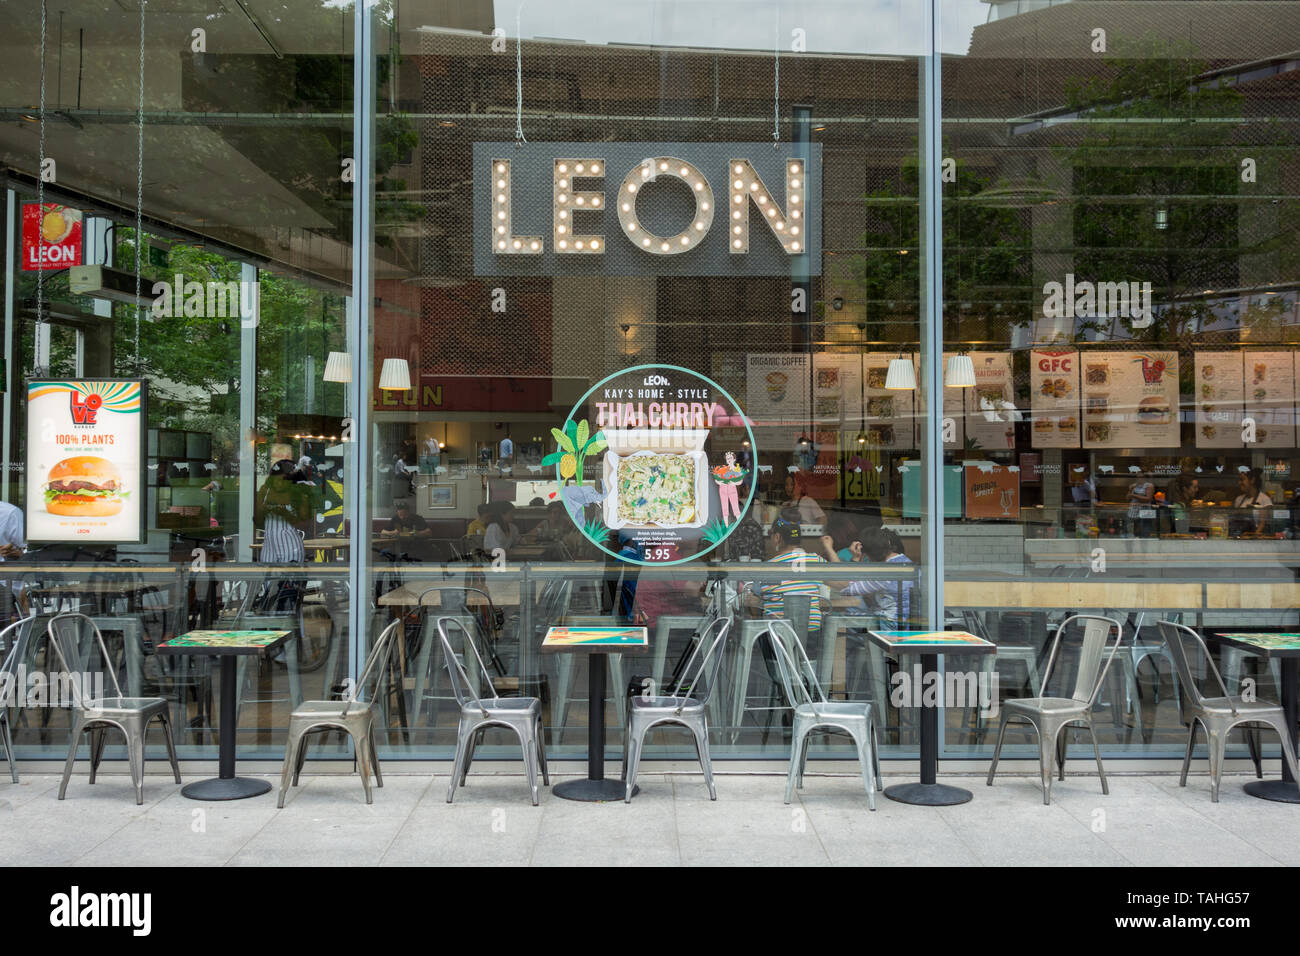 Leon fast food Restaurant kette Fassade, London, UK Stockfotografie - Alamy